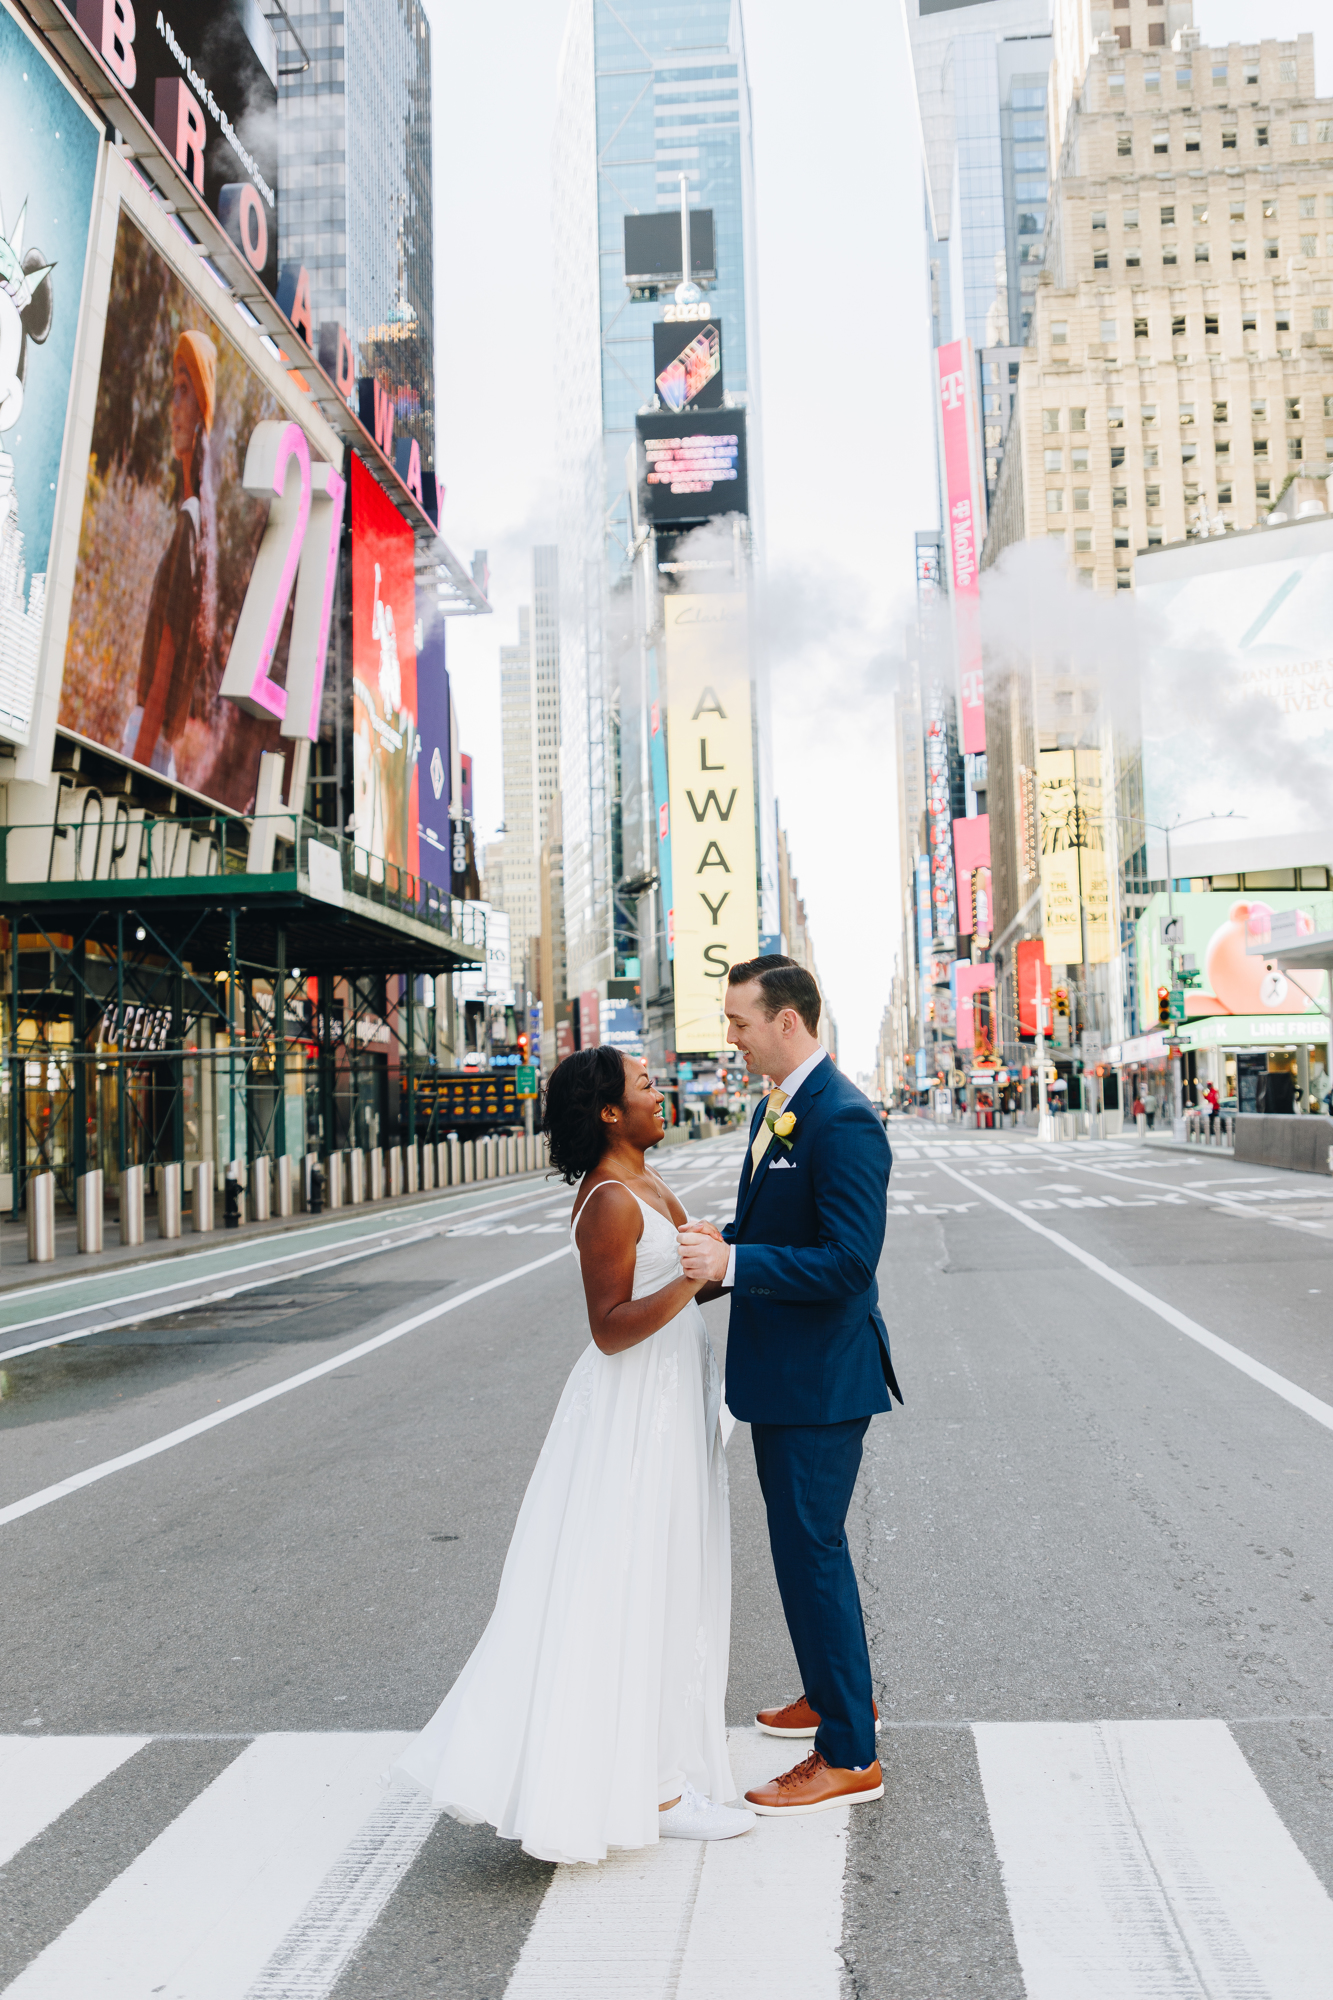 Fun Times Square Wedding Photos in NYC